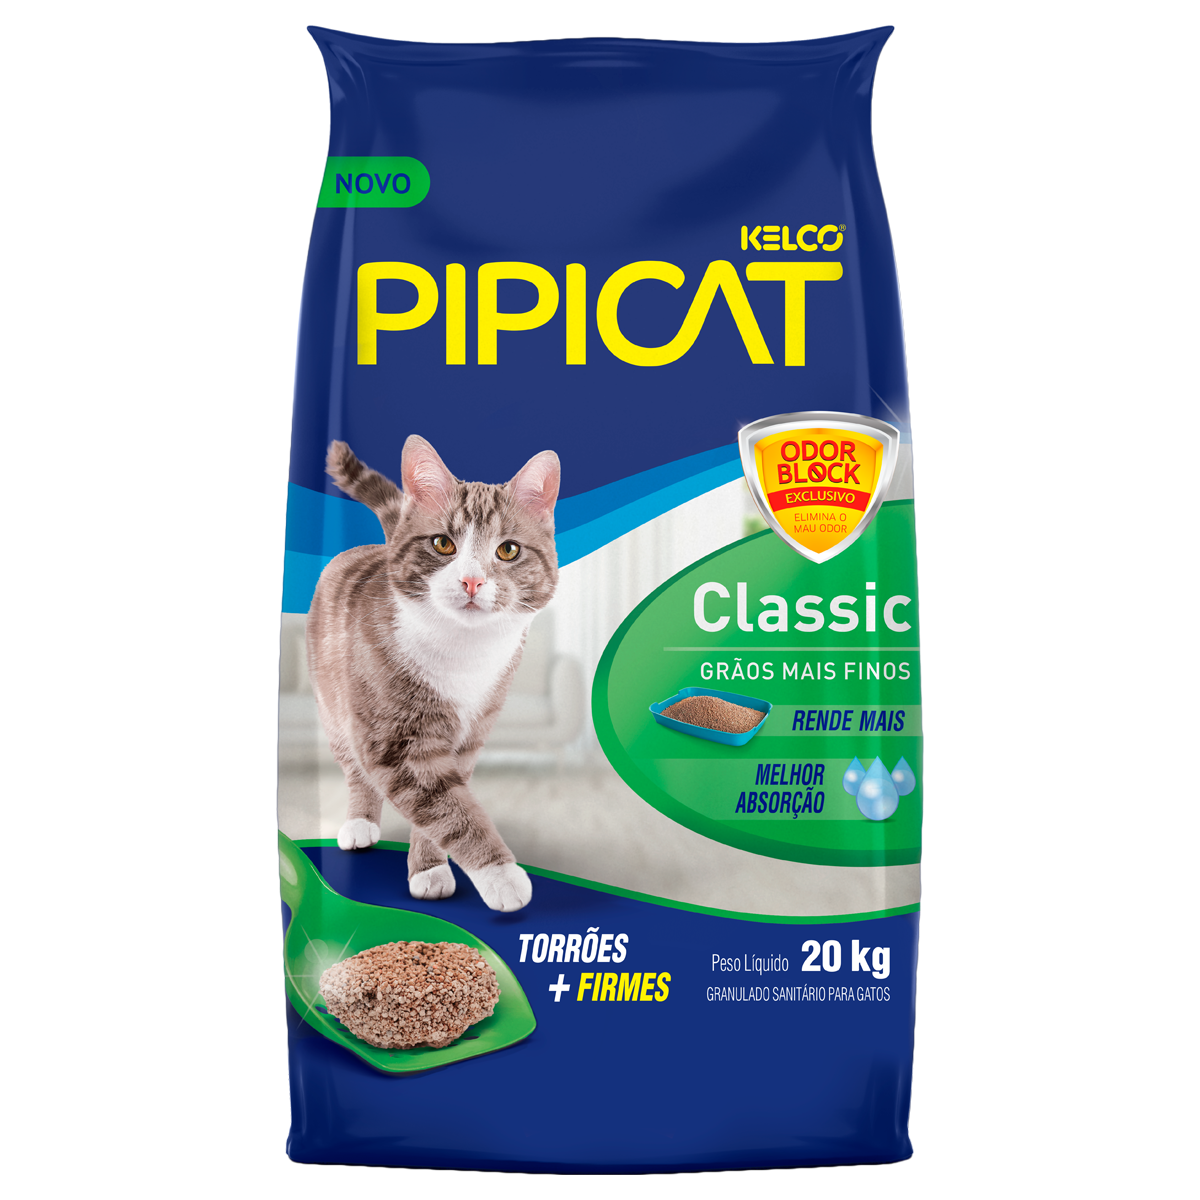 Pipicat Classic Odor Block 20kg